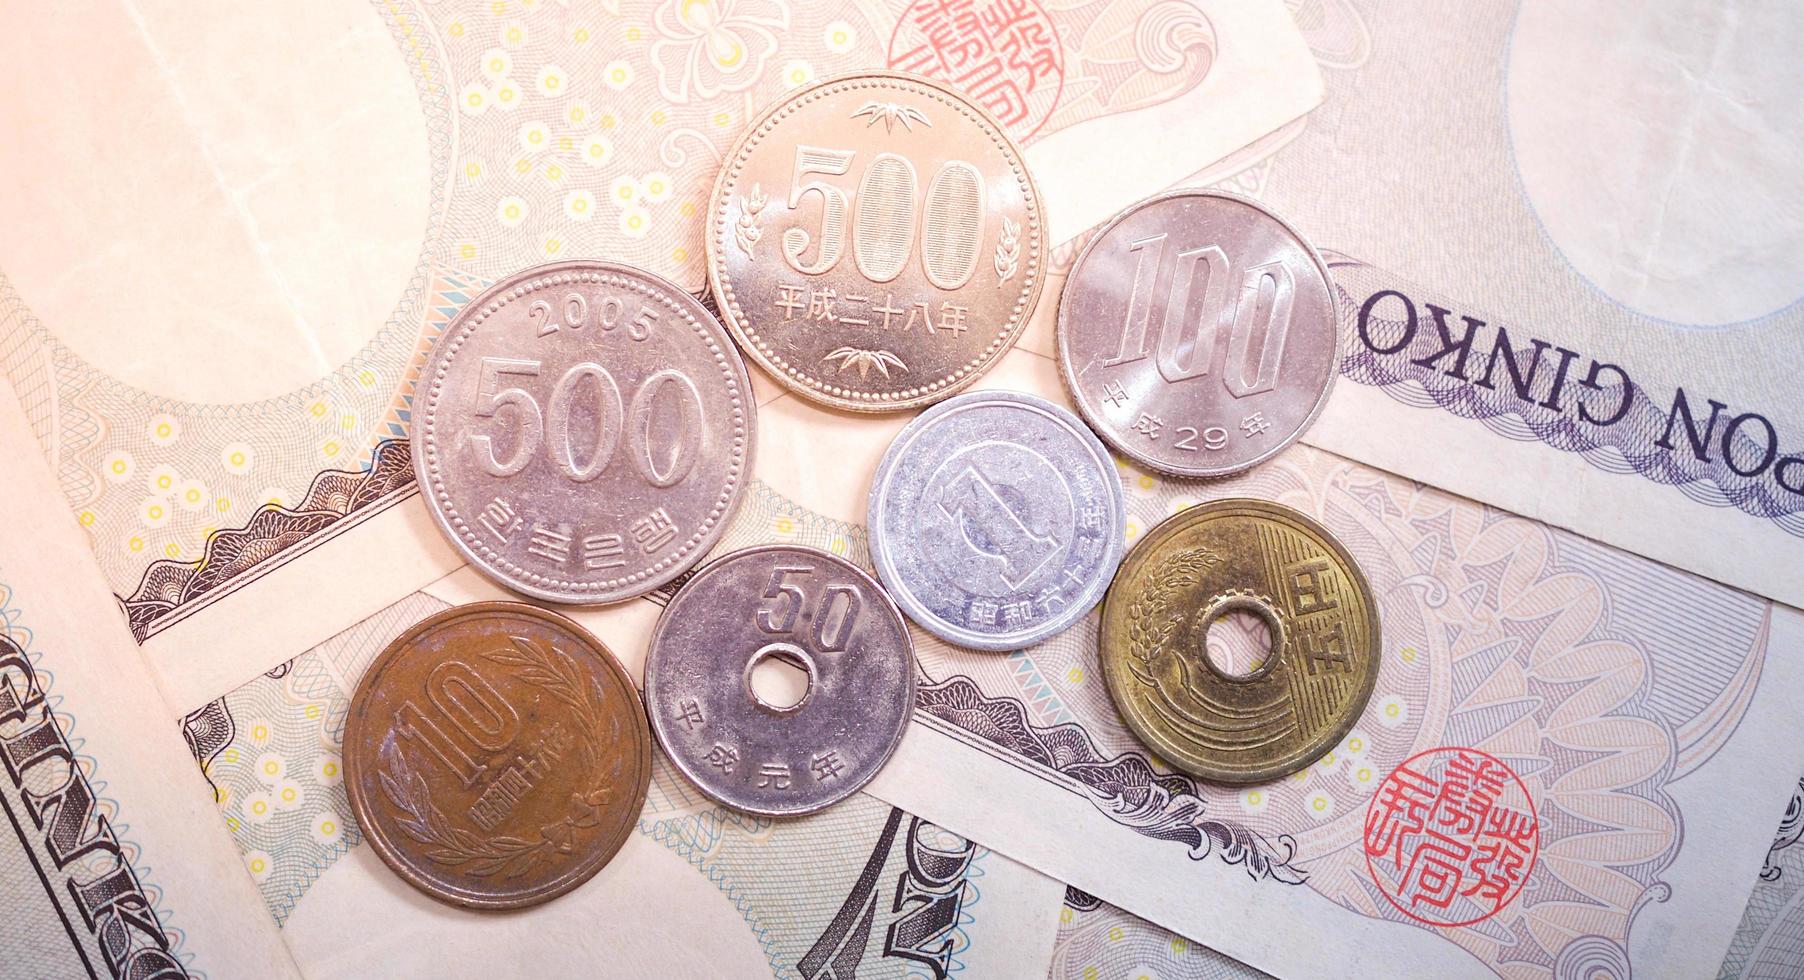 billetes de yen japonés y monedas de yen japonés por concepto de fondo de dinero foto